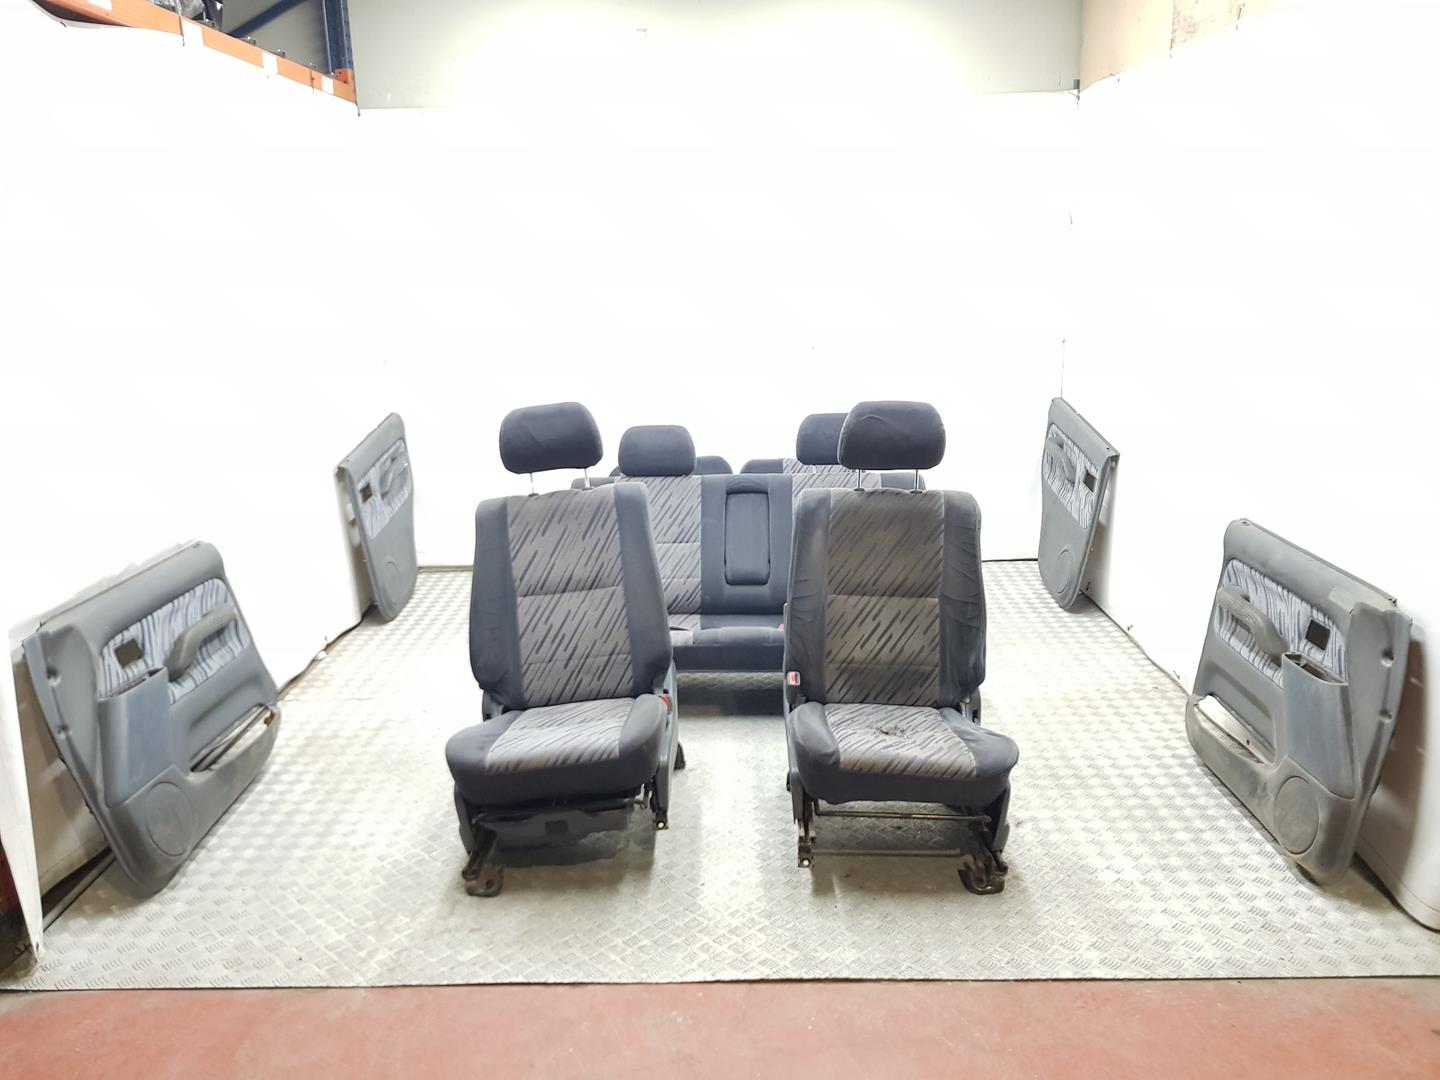 TOYOTA Land Cruiser Prado 90 Series (1996-2002) Seats ASIENTOSTELA, ASIENTOSMANUALES, CONPANELES 24149365